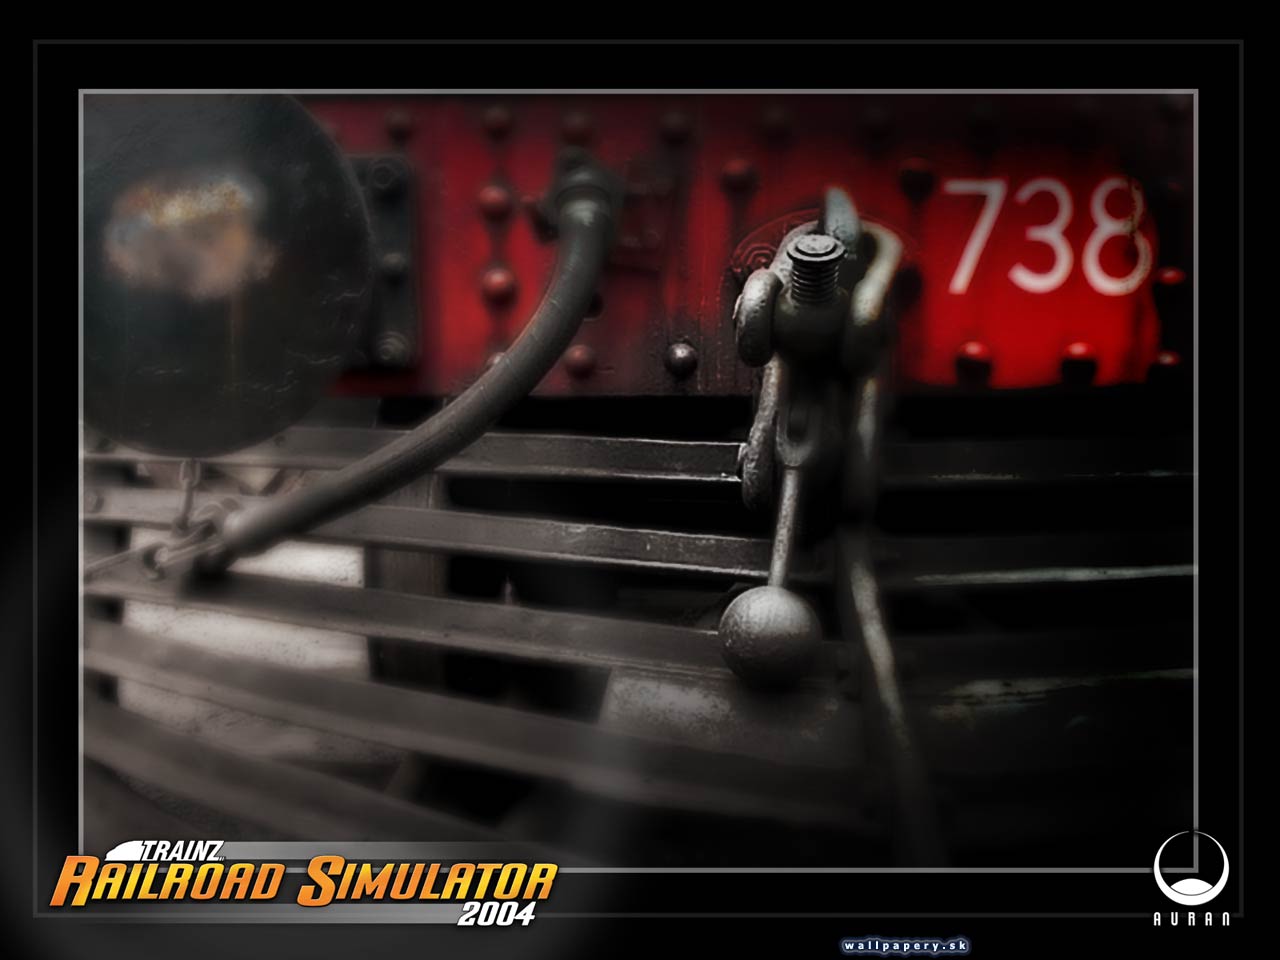 Trainz Railroad Simulator 2004 - wallpaper 10